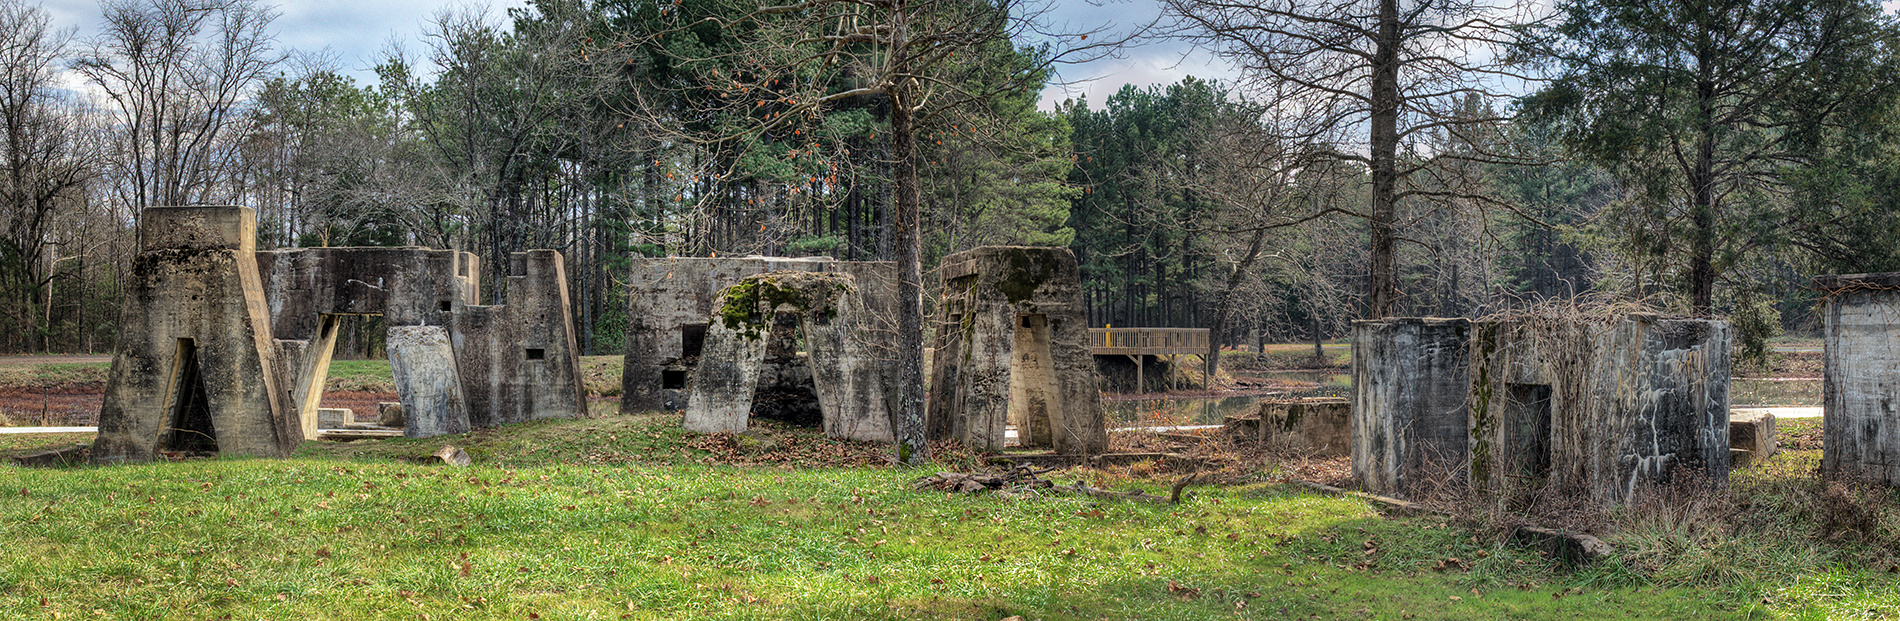 Forester’s Stonehenge